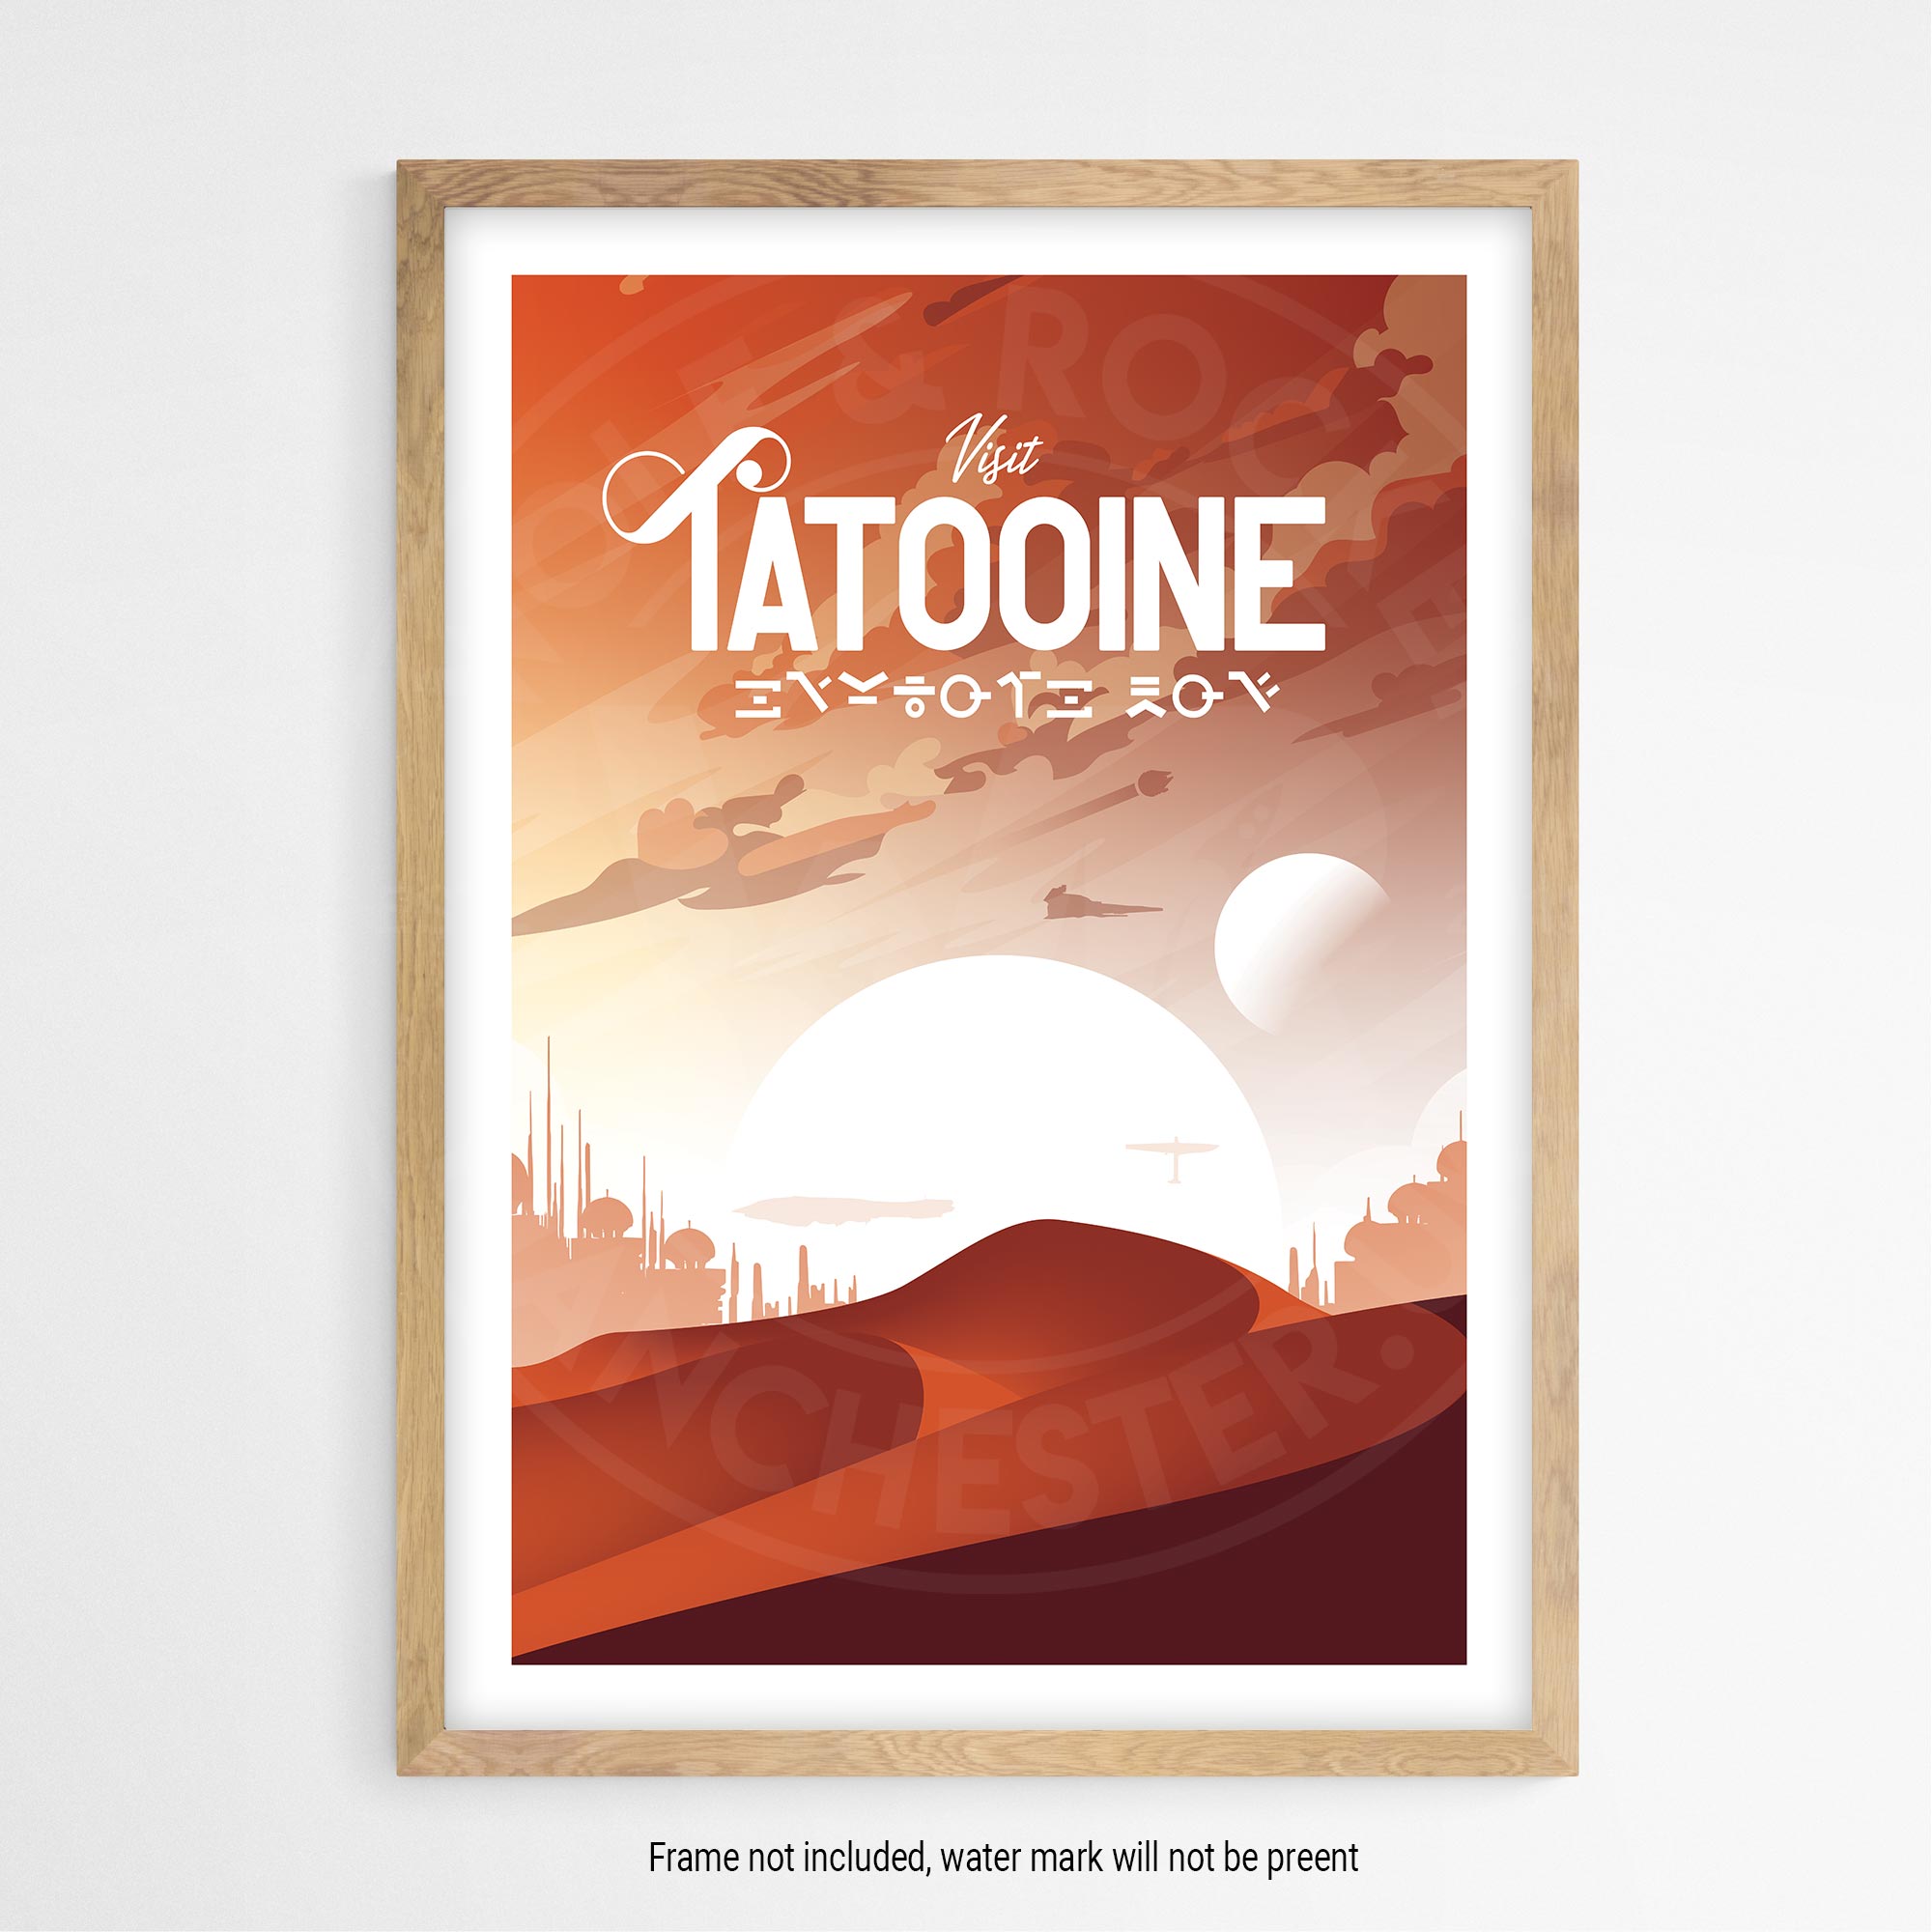 Tatoonie Travel Movie Poster - Wolf and Rocket